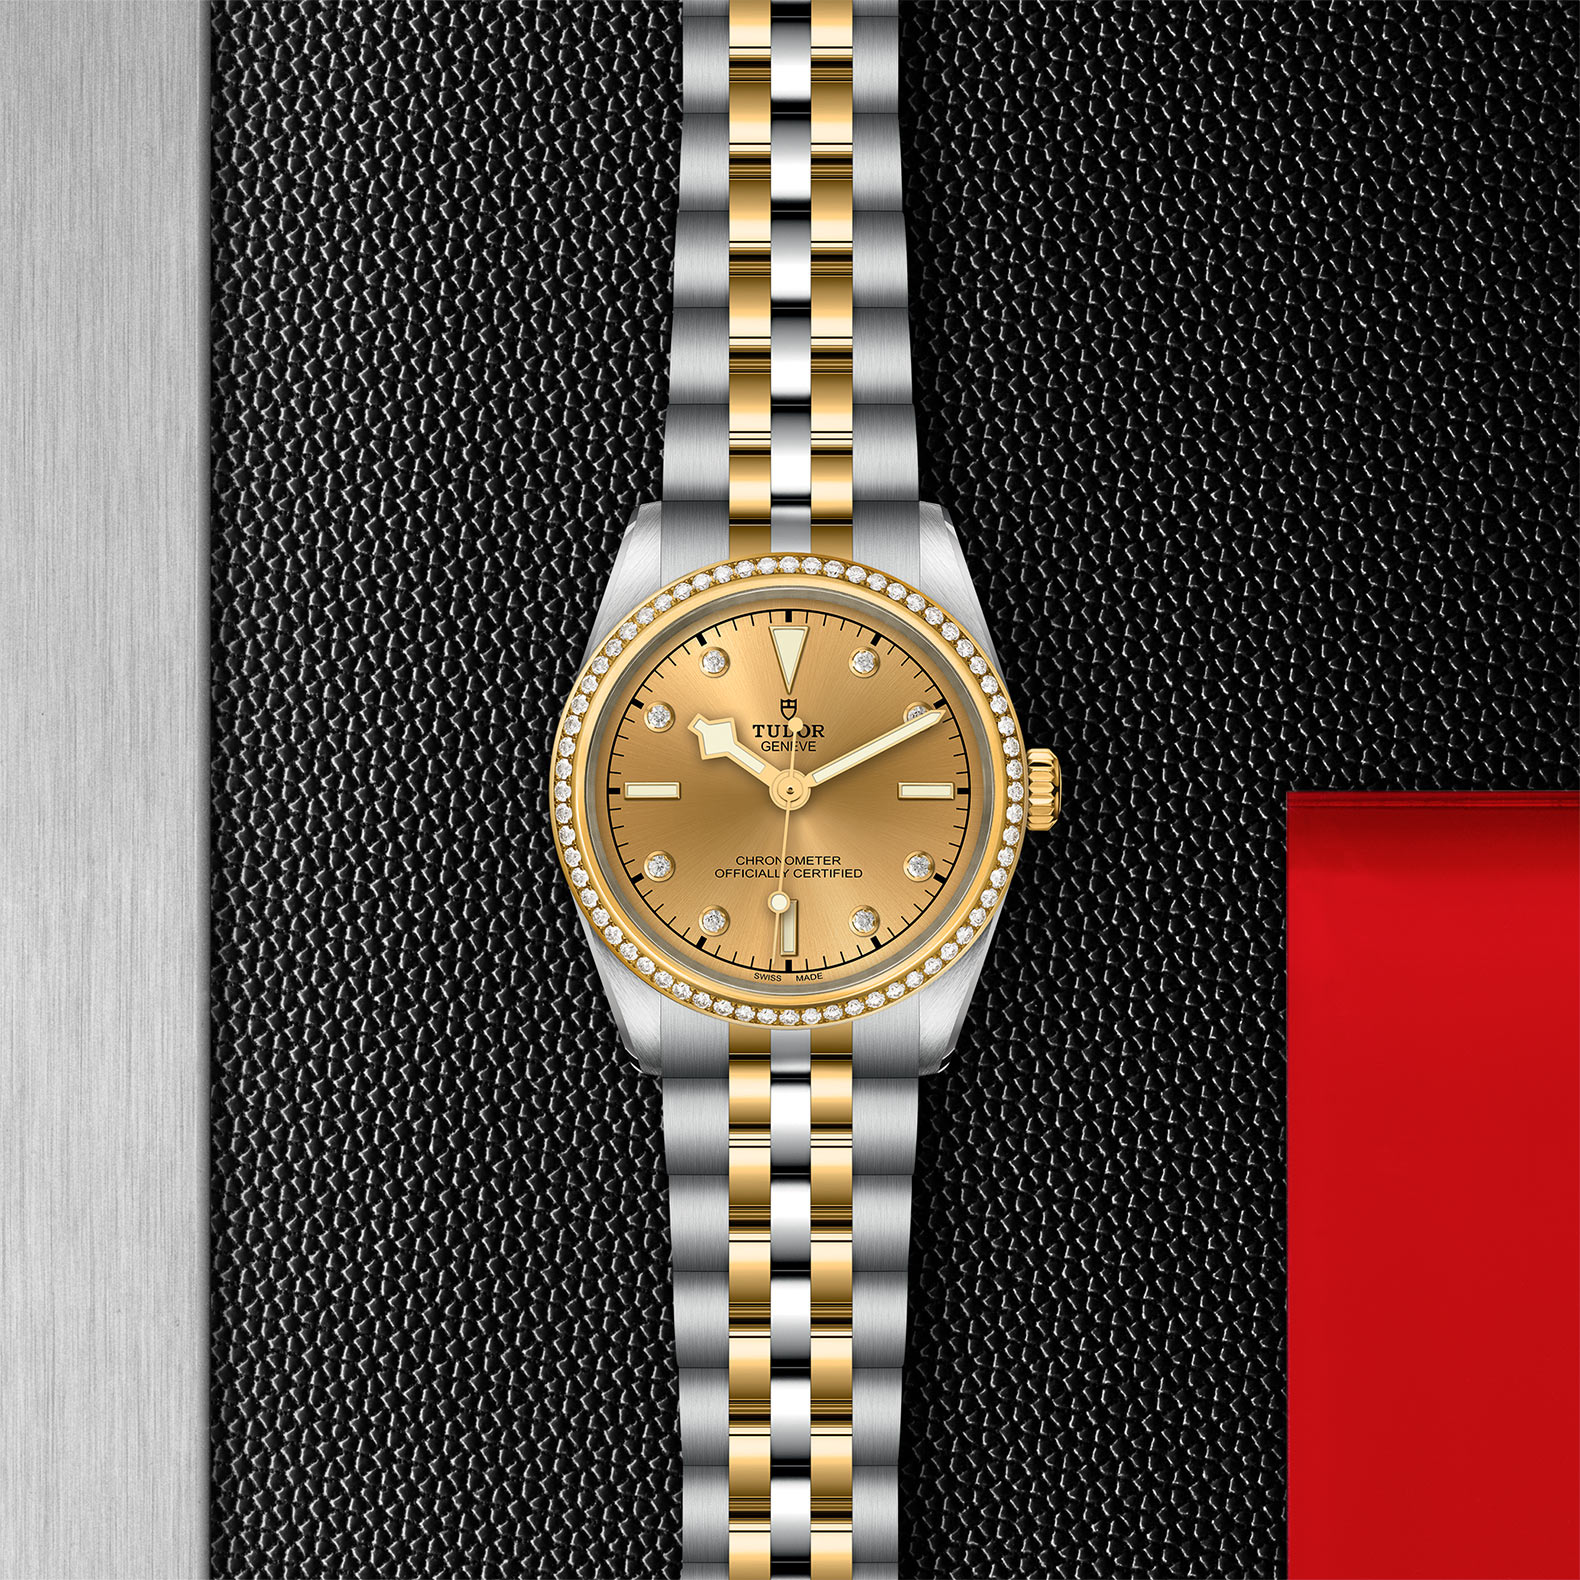 Tudor Watch Assets M79613 0007 Instore Flatlay